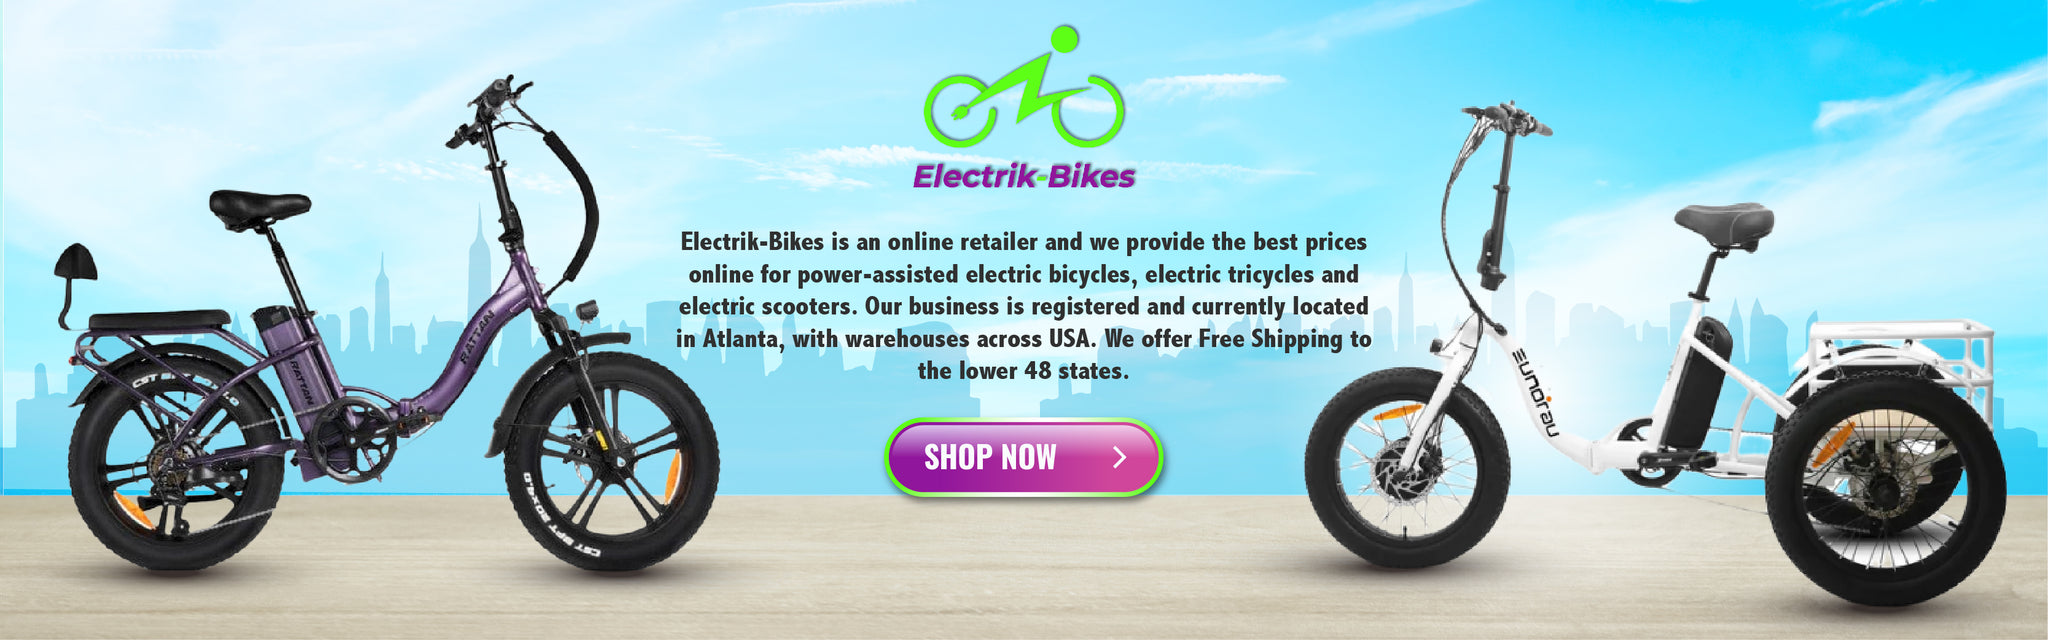 Electrik-Bikes Best Online Electric Bike Dealer